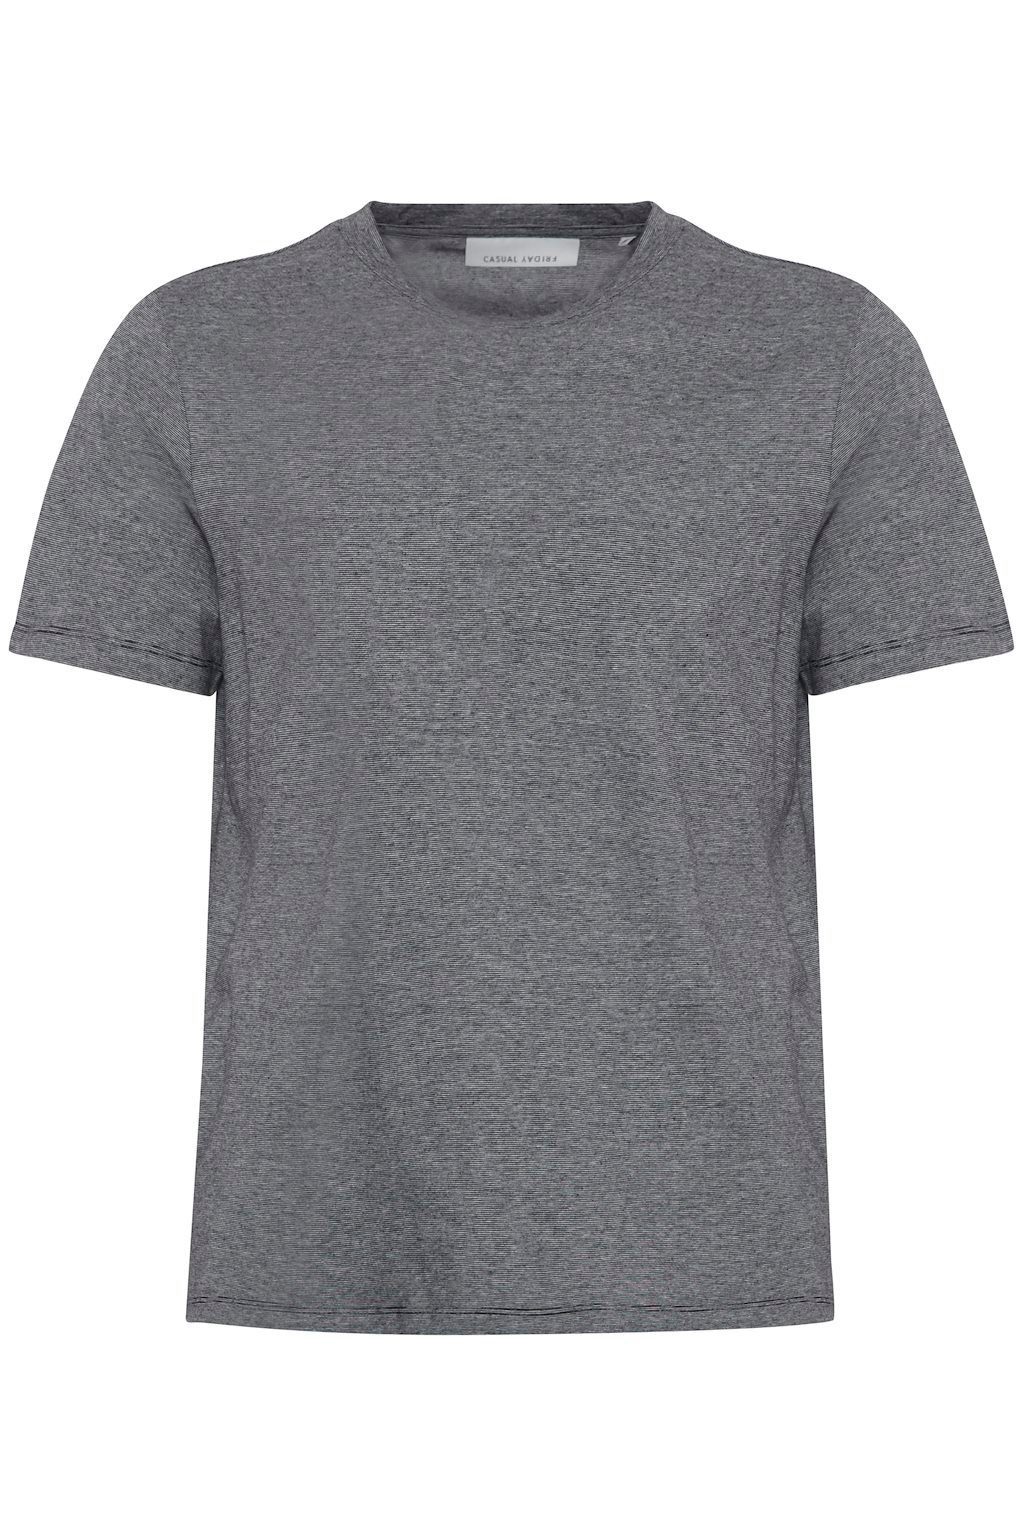 Basic T-Shirt in 5743 CFThor Meliert T-Shirt Casual Friday Grau Rundhals